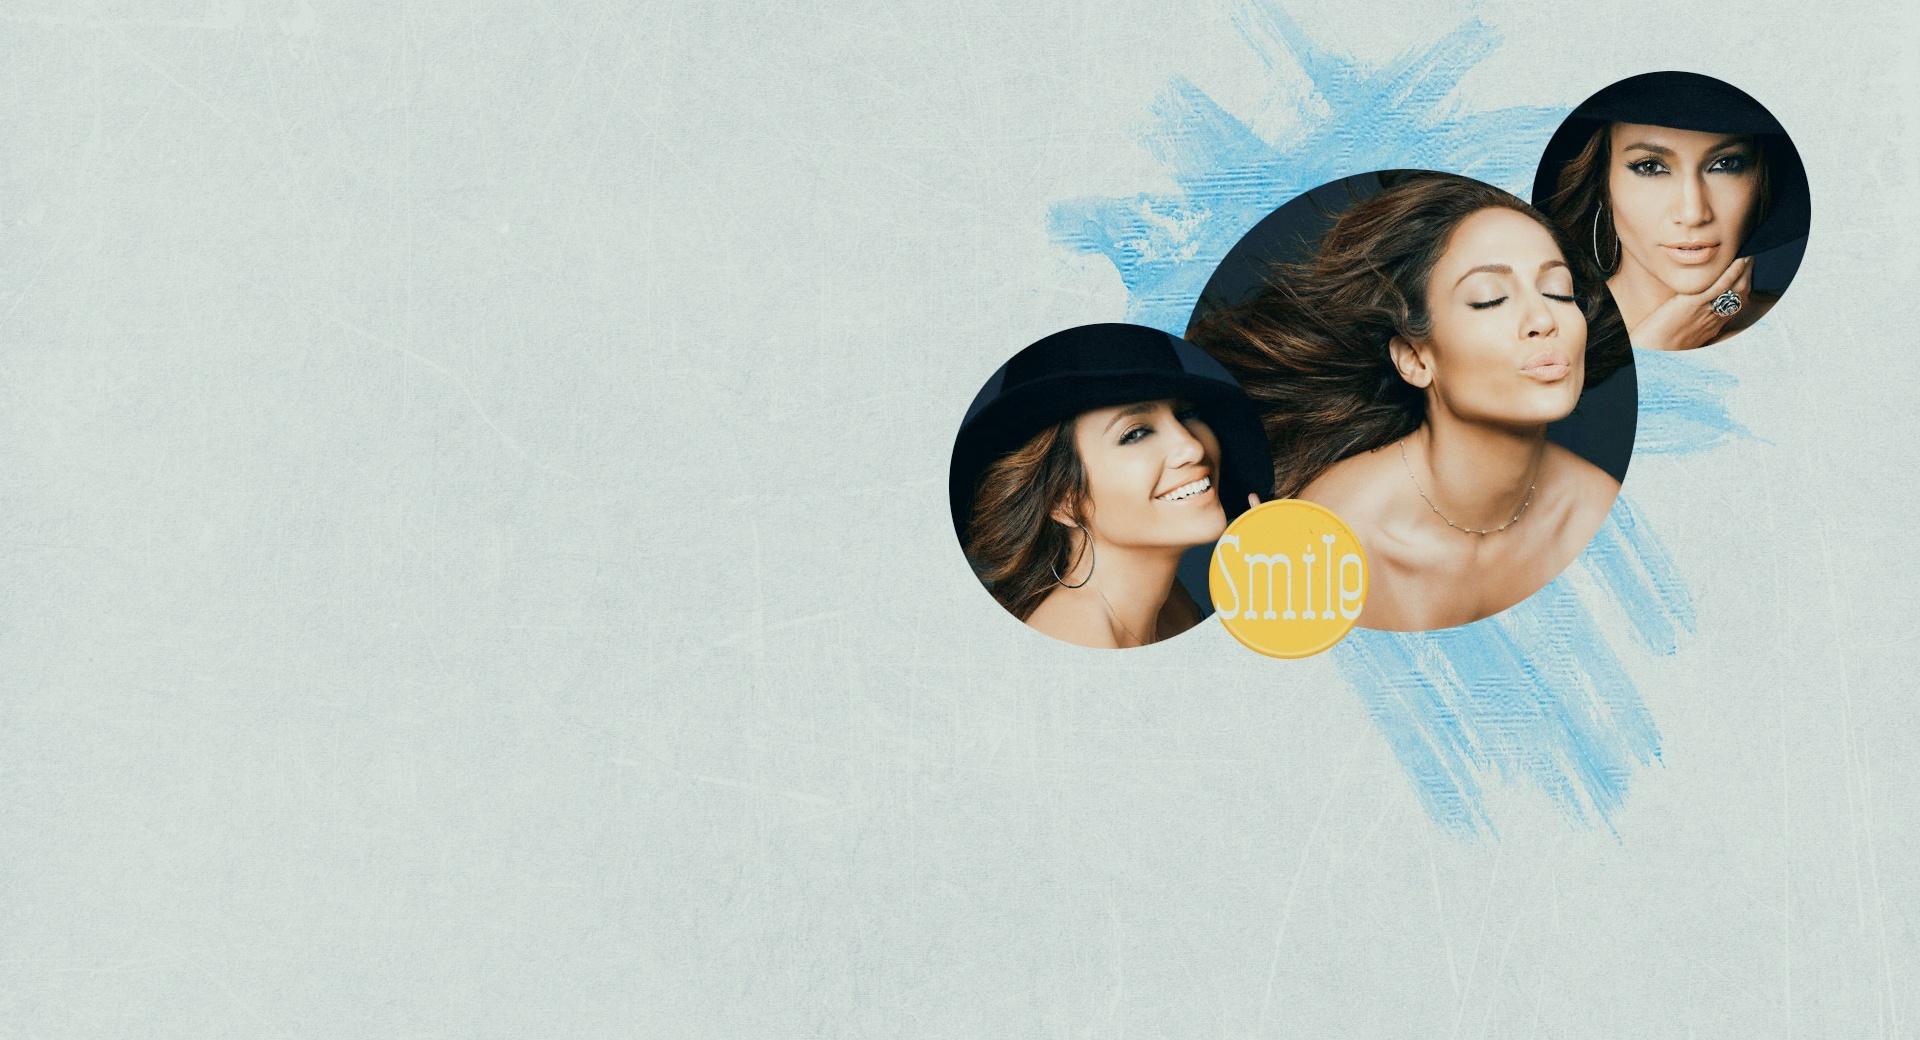 Jennifer Lopez Smile at 1600 x 1200 size wallpapers HD quality